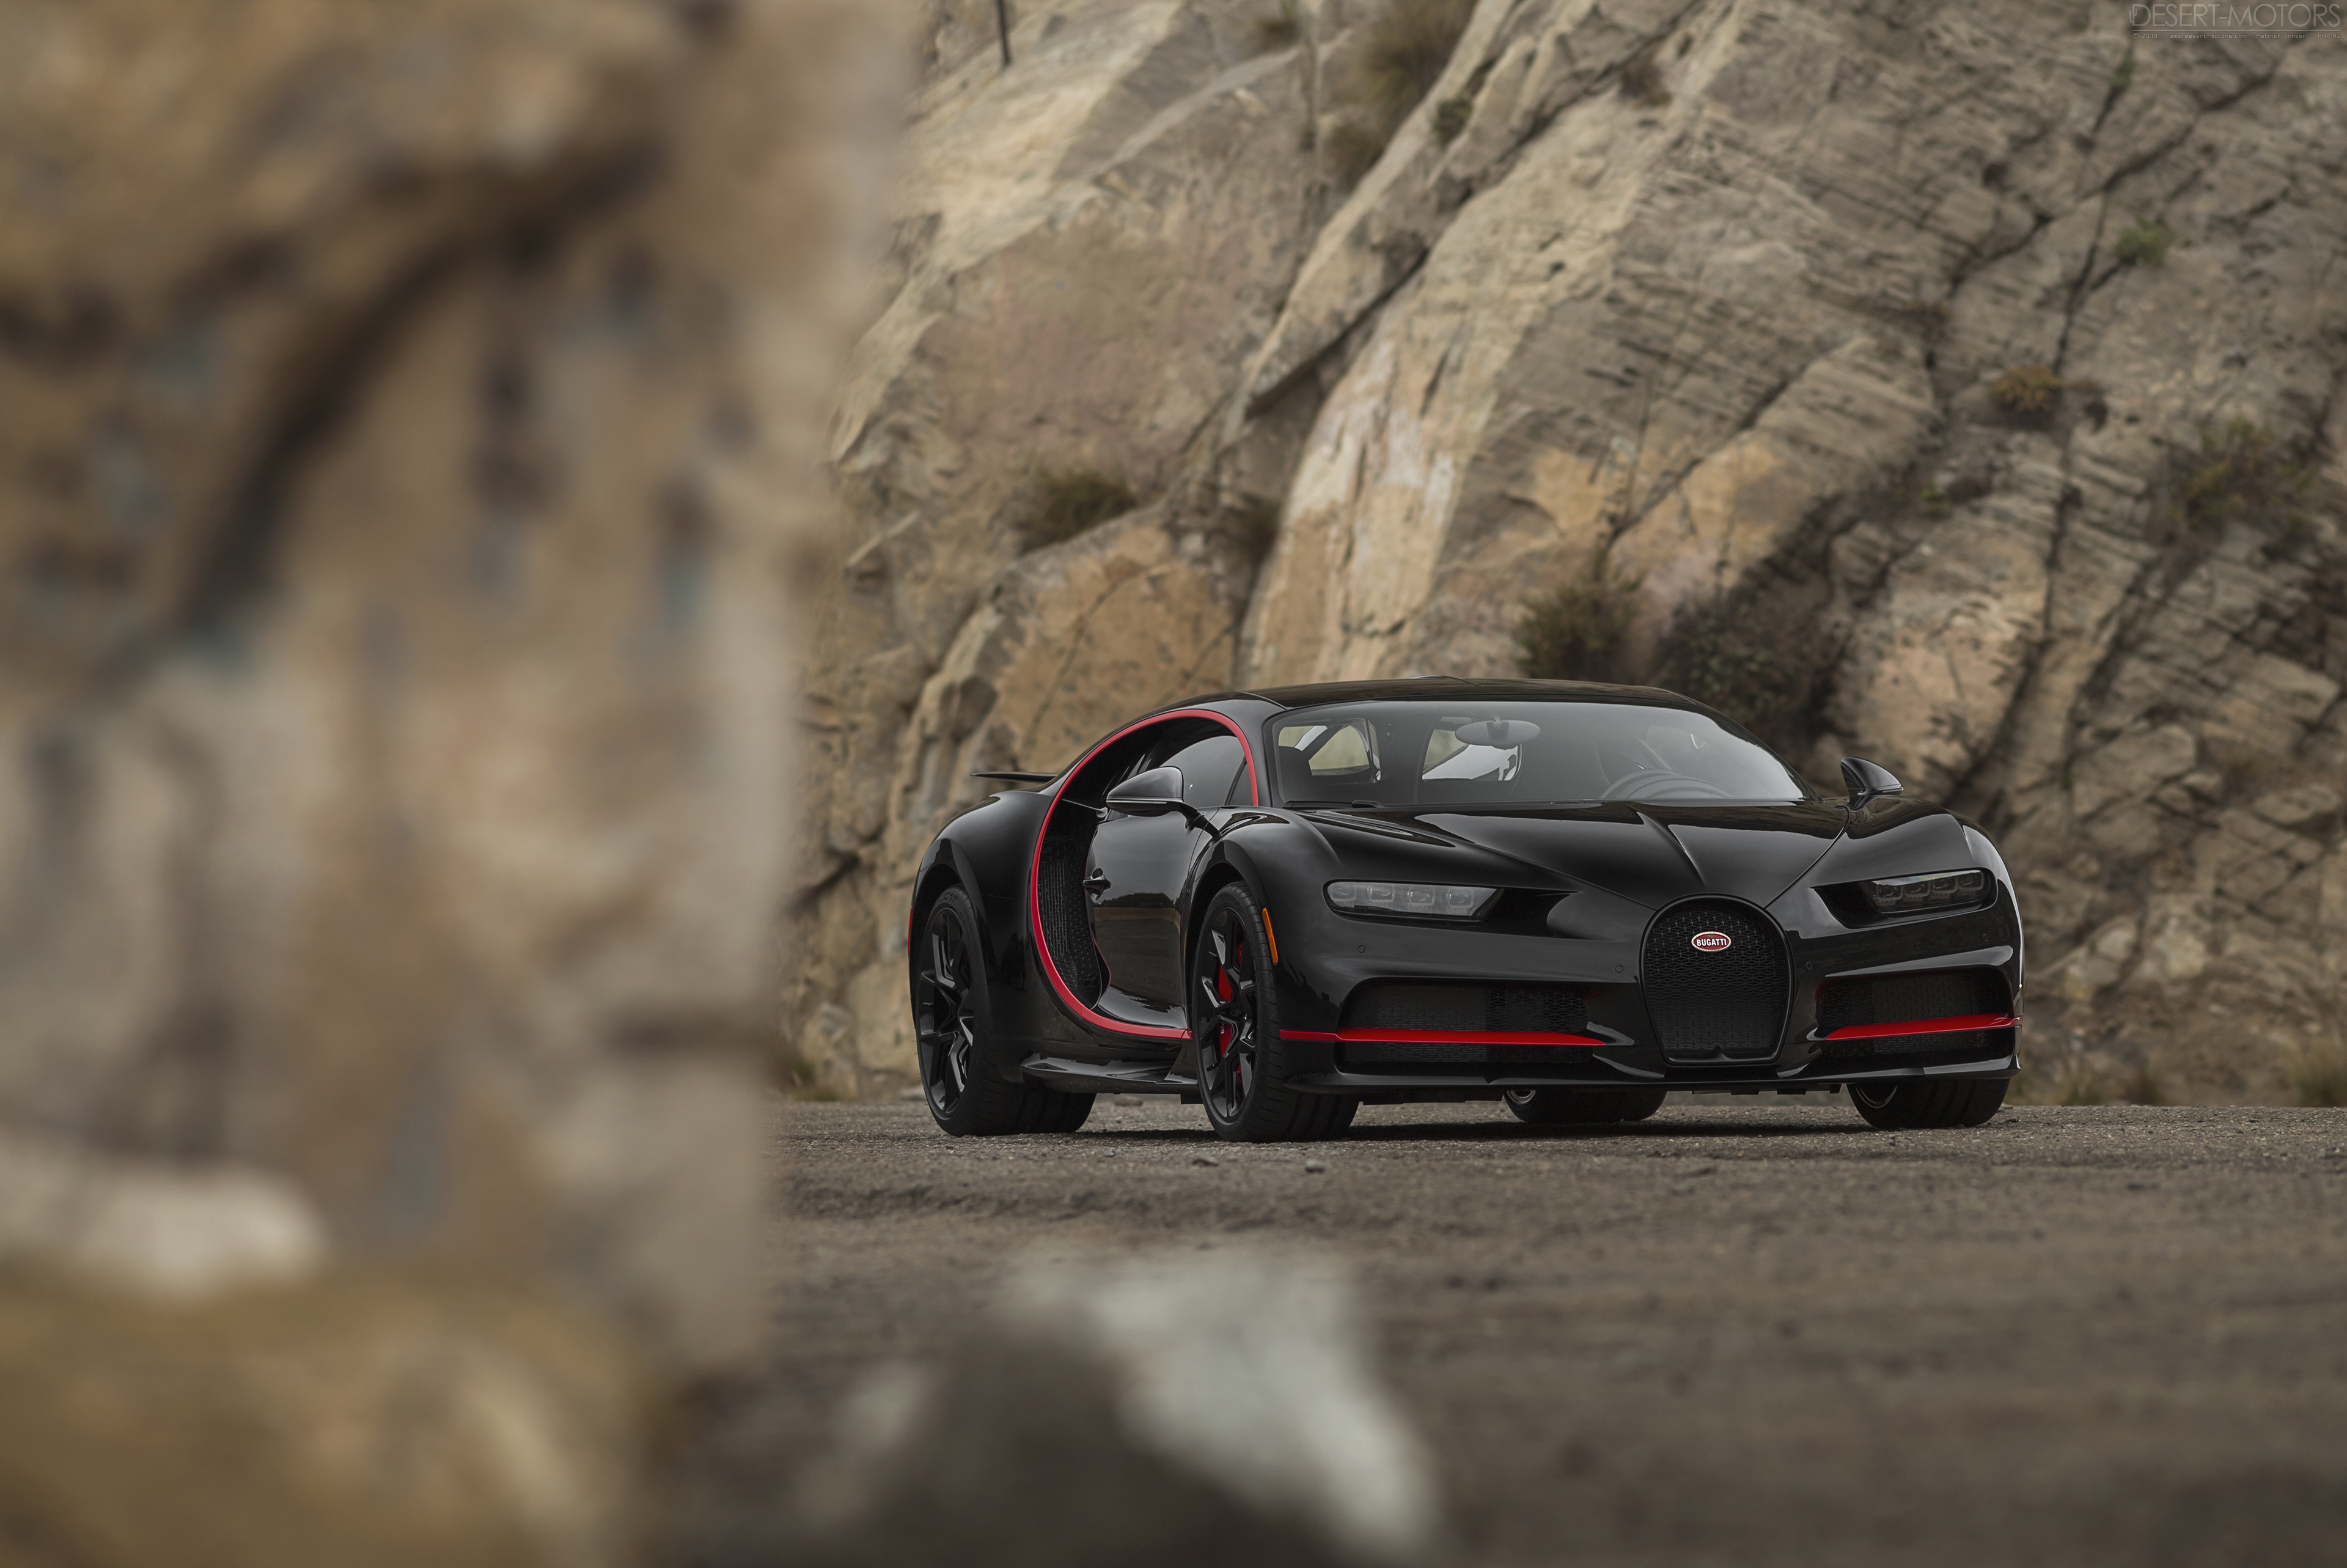 Buggati Bugatti Chiron Black Cars Hypercar Rocks Wall 3840x2566